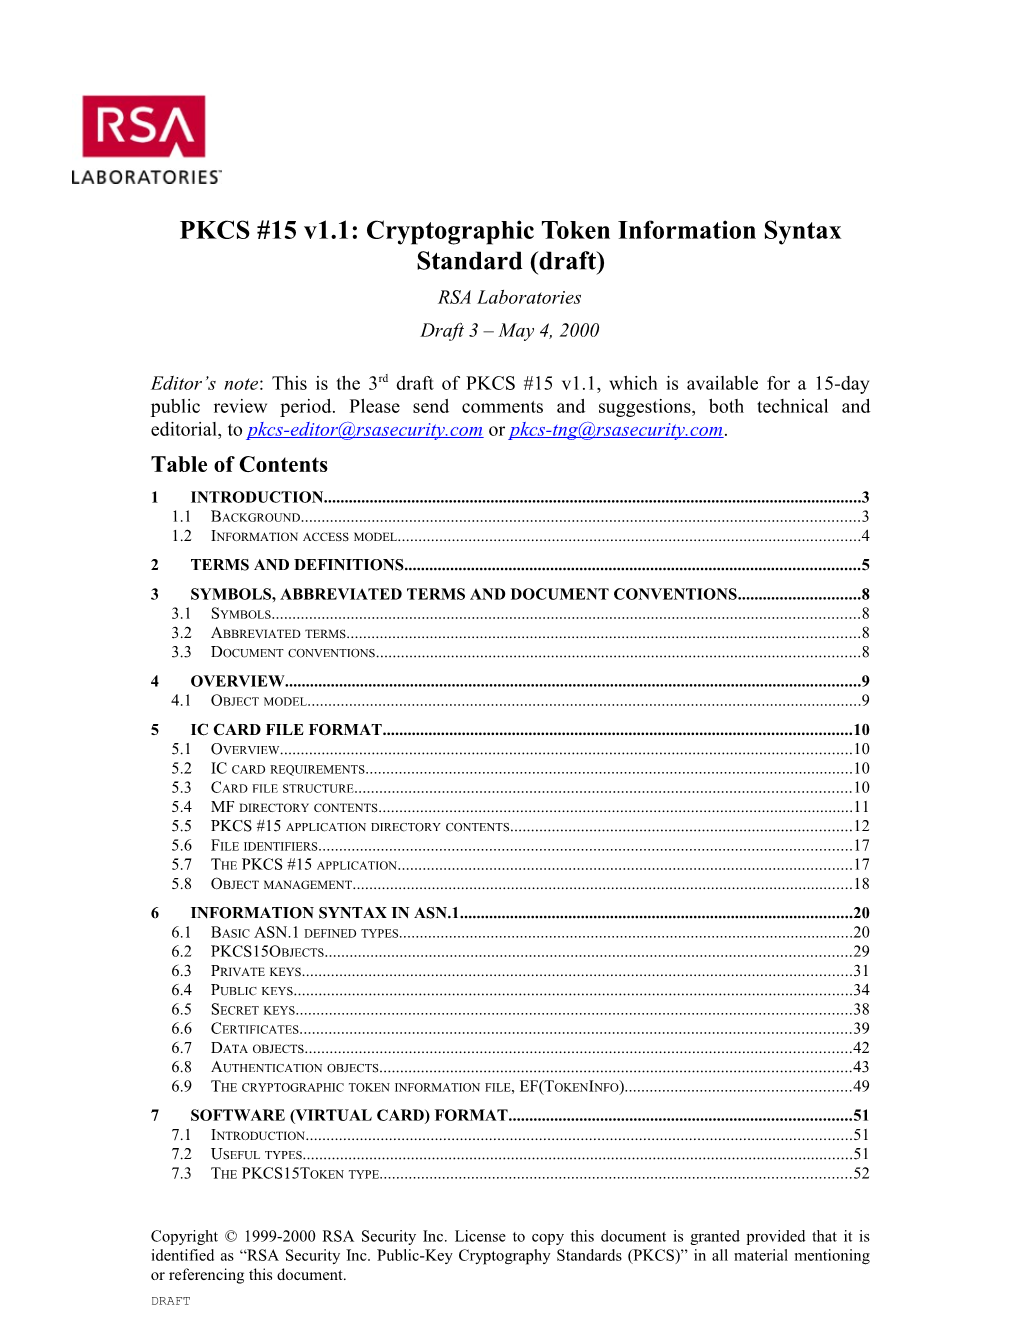 PKCS #15 V1.1: Cryptographic Token Information Syntax Standard